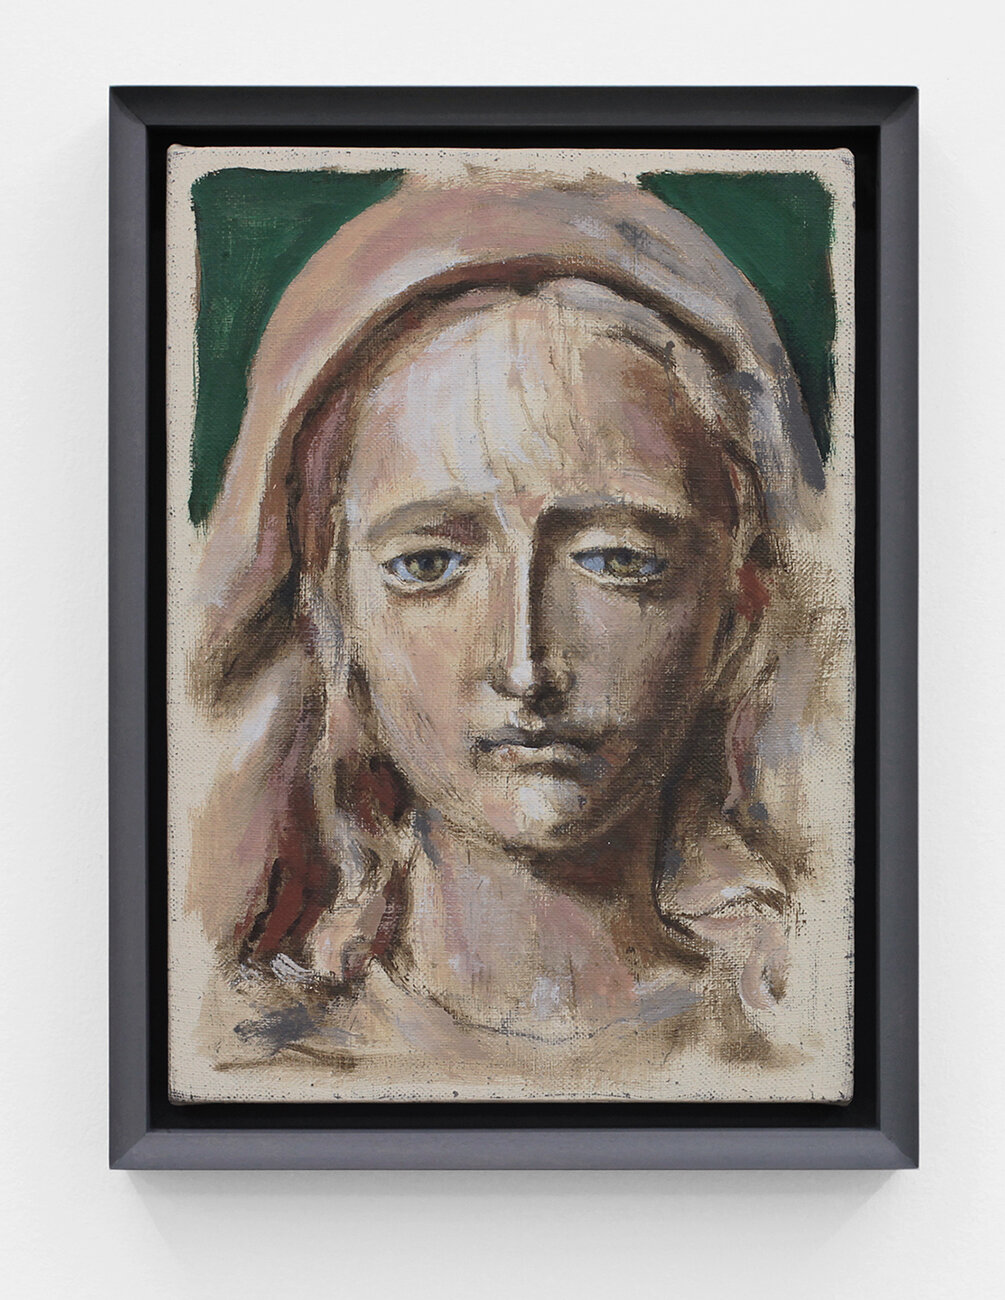  Ebay Madonna II  2018  Distemper on canvas  9.5 x 7 inches  (24.13 x 17.78 cm)     